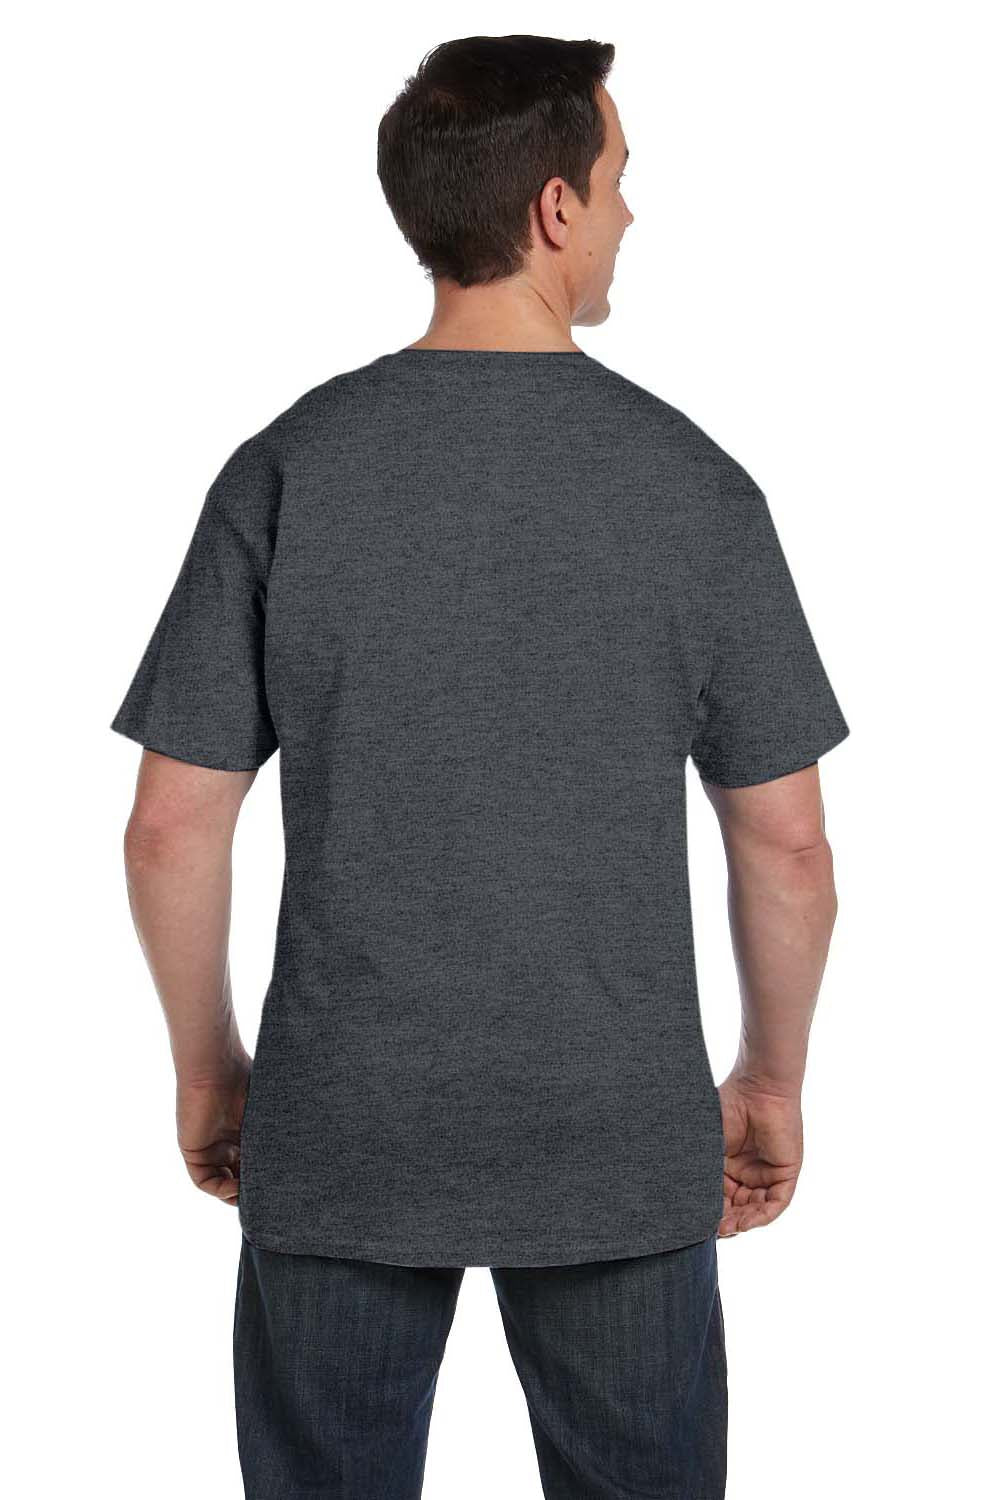 Hanes 5190P Mens Beefy-T Short Sleeve Crewneck T-Shirt w/ Pocket Heather Charcoal Grey Back